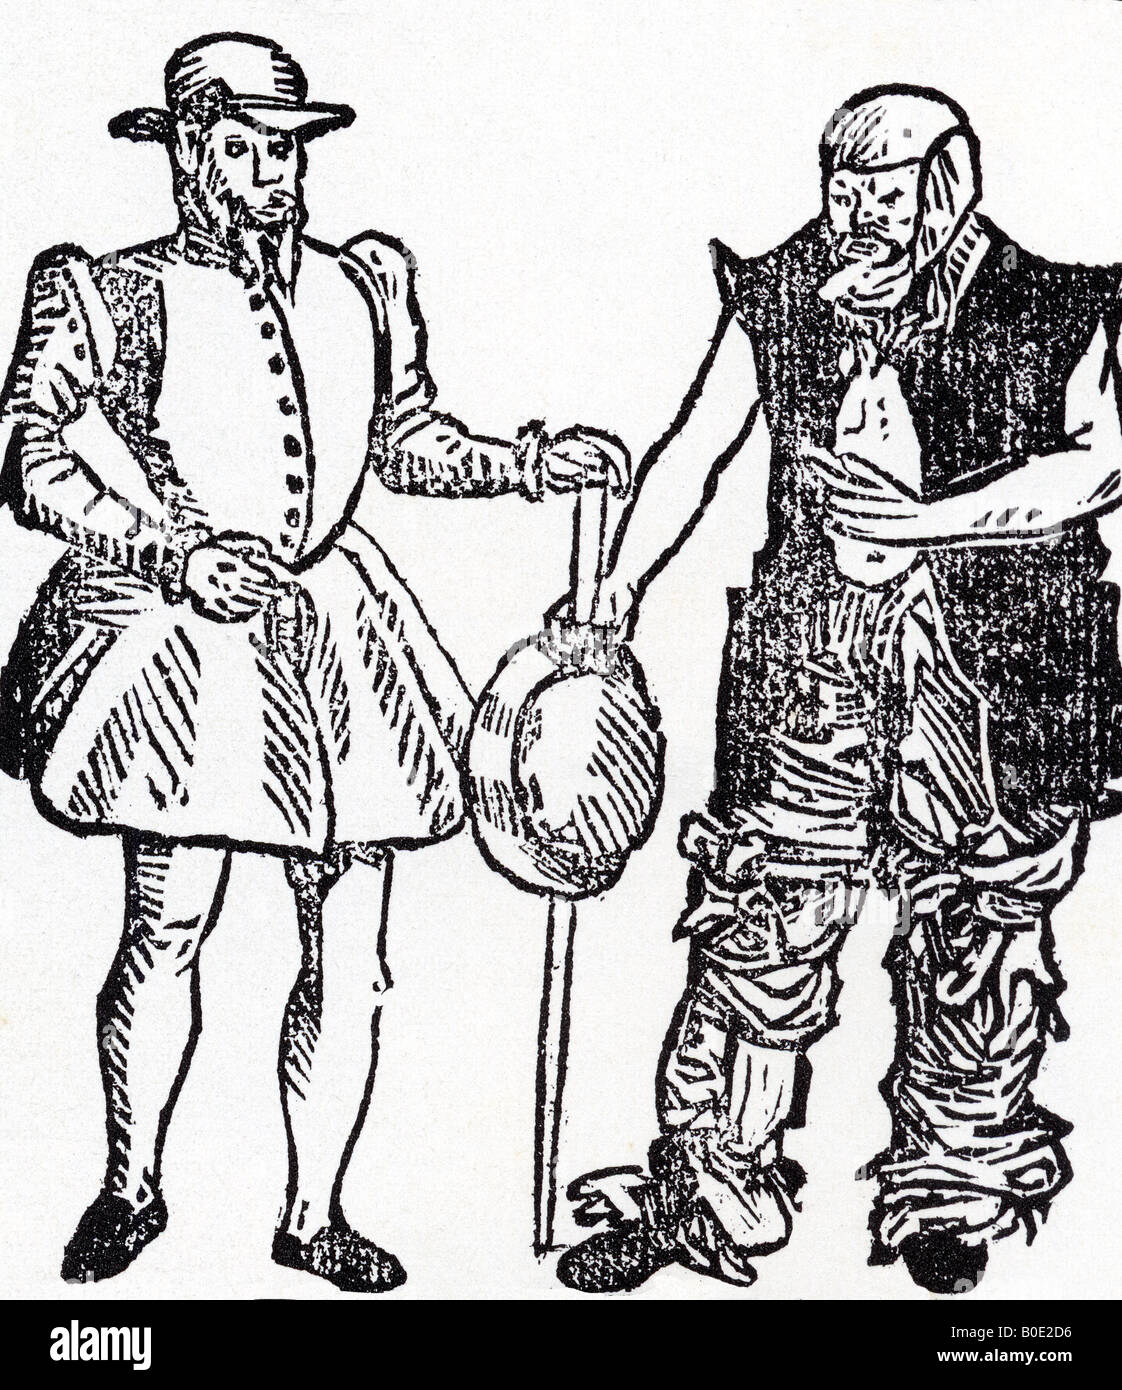 ELIZABETHAN CONEYCATCHER  criminals masquerading as beggars were common in Elizabethan England.See Description below for details Stock Photo